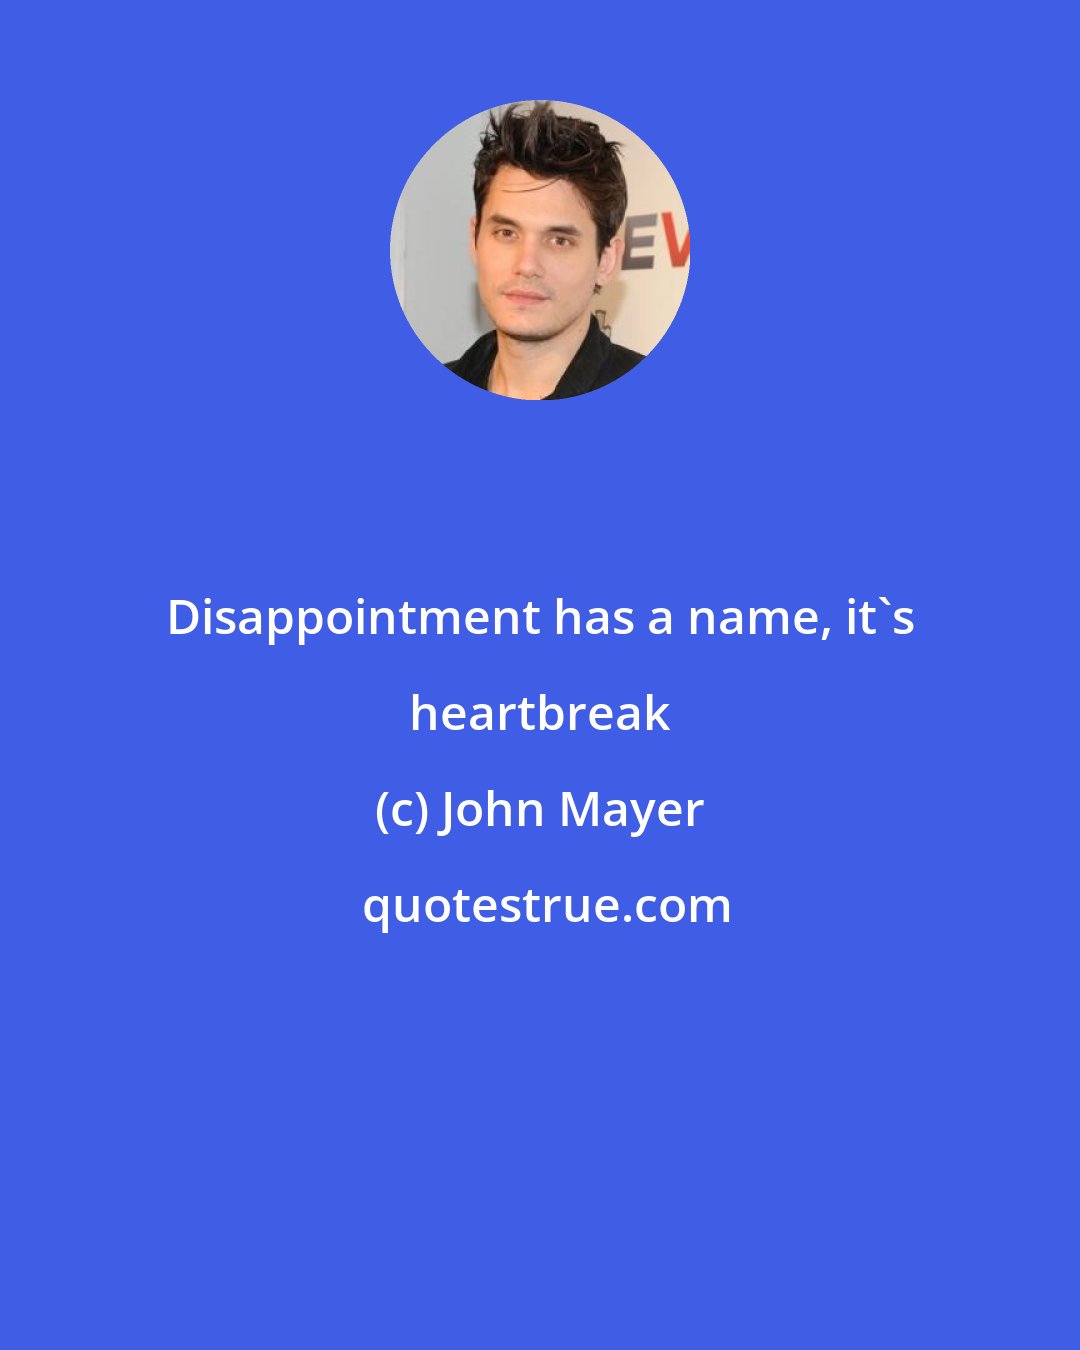 John Mayer: Disappointment has a name, it's heartbreak